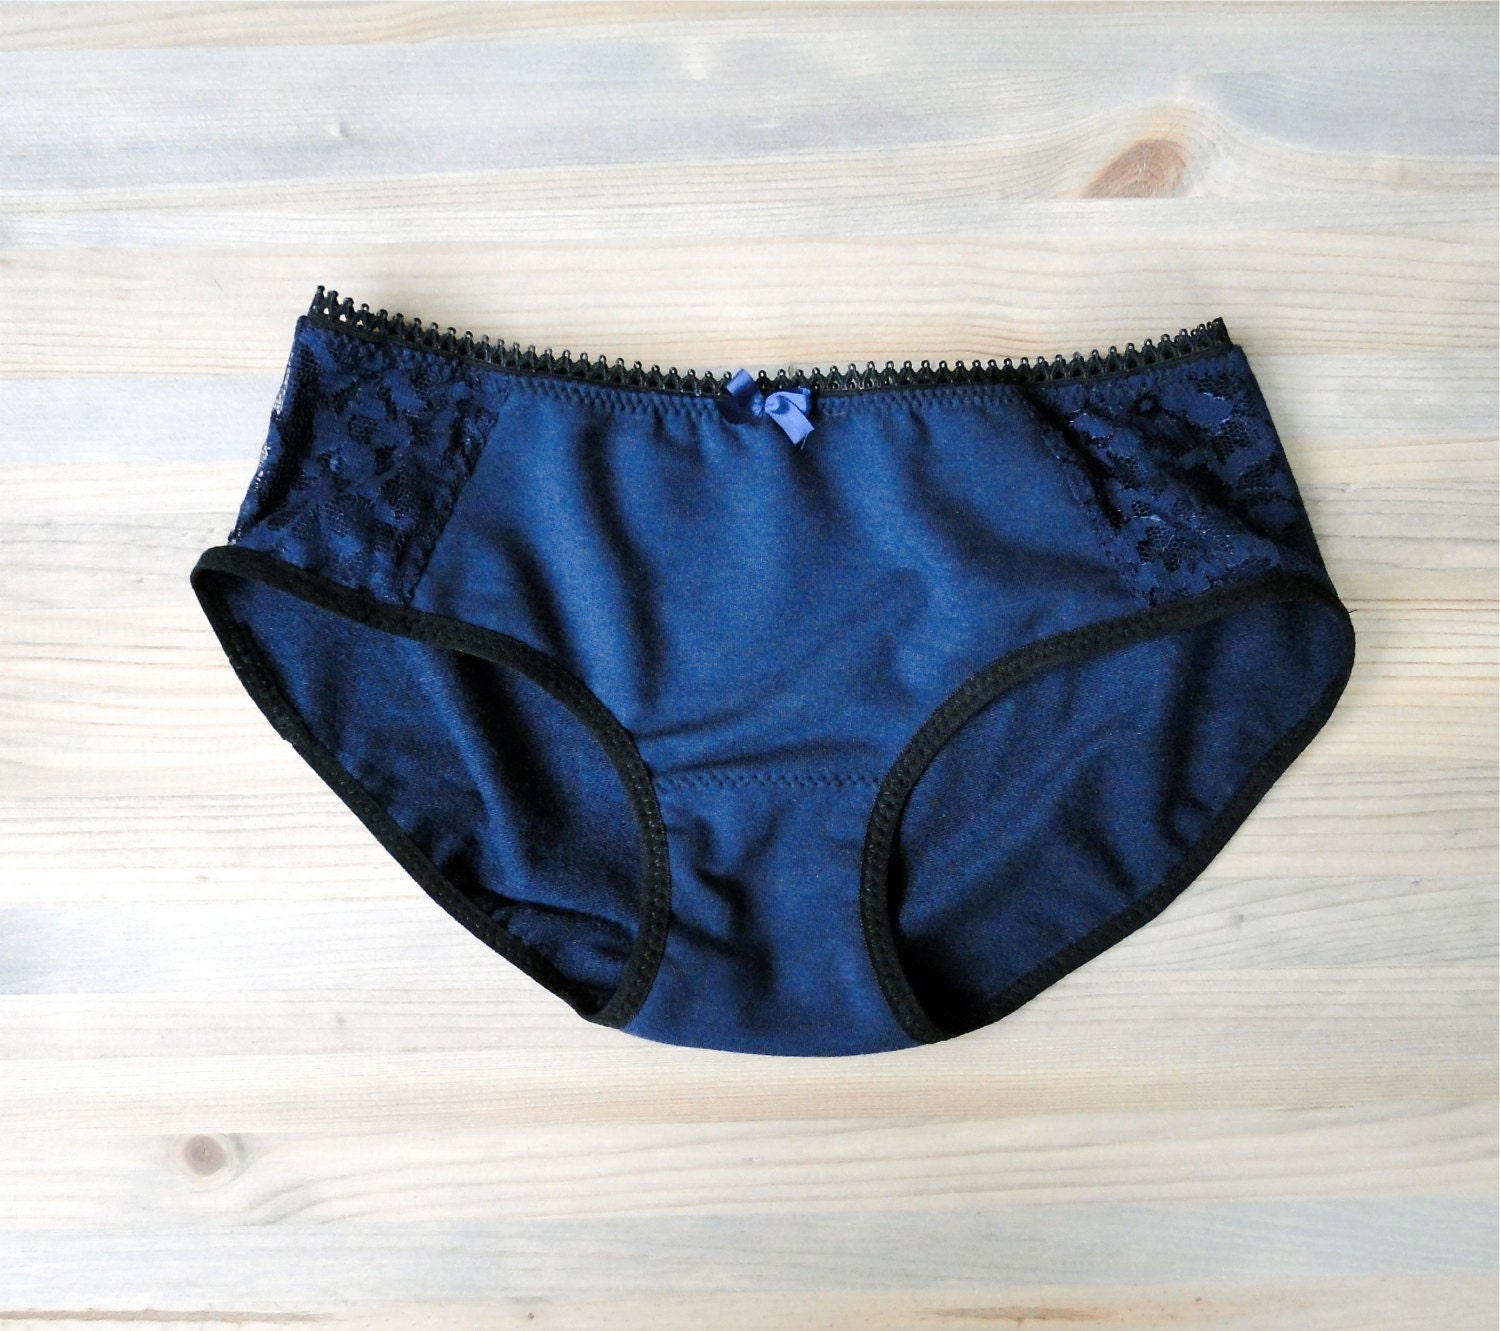 Organic cotton hipster panties - organic womens underwear - navy blue lace undergarment - romantic lingerie - econica